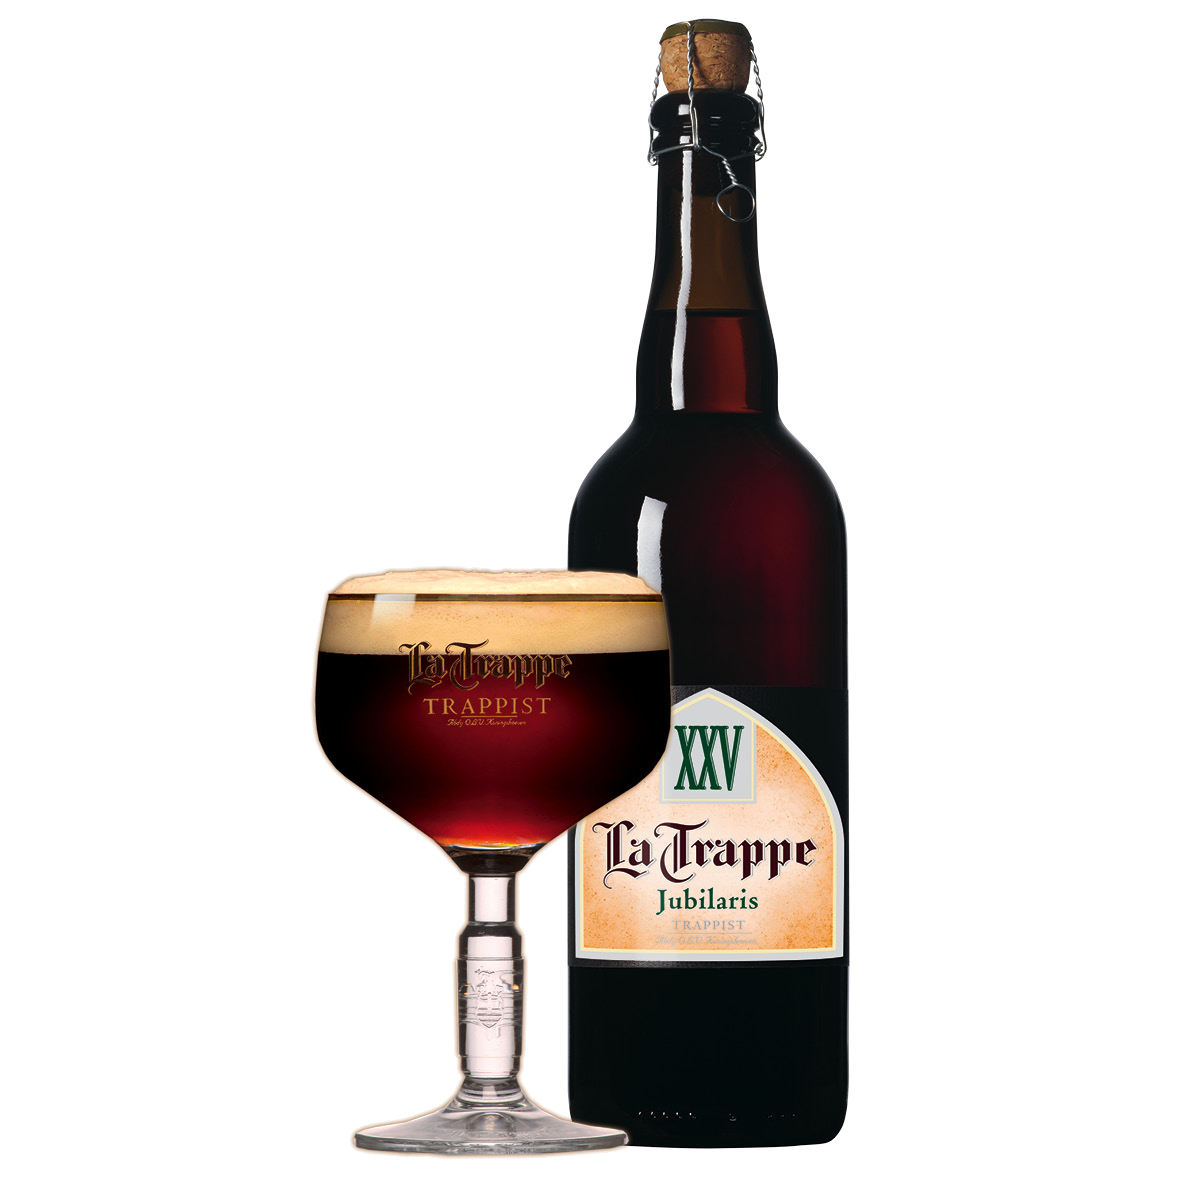 Bier review, bier, Geroen, Geroen Vansteenbrugge, La Trappe, La Trappe Jubilaris, review